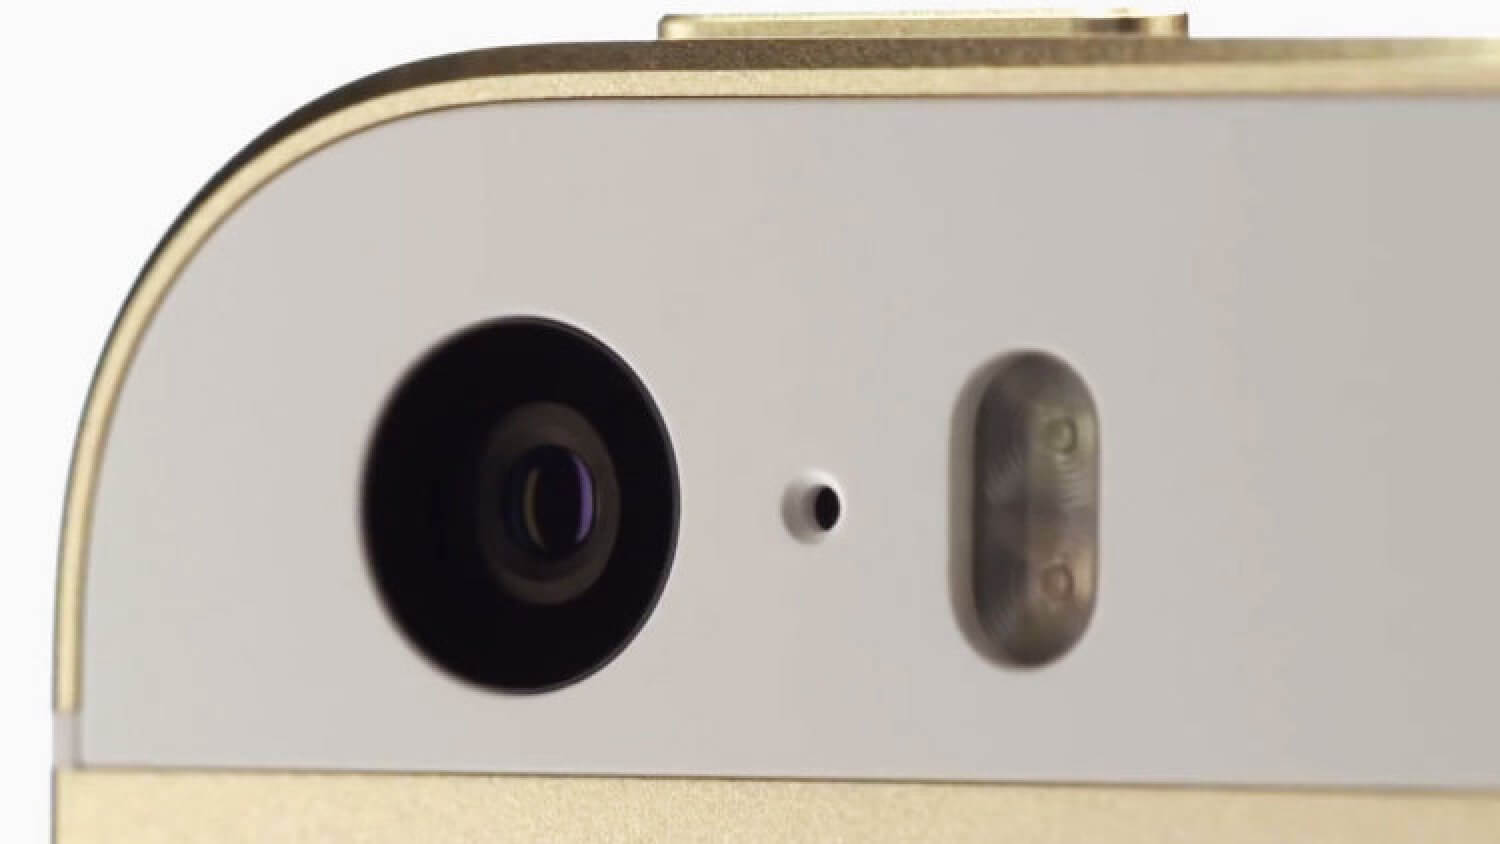 Sony Xperia Z2 и iPhone 5s — стекло и алюминий. Соревнование флагманов прошлого. Камера. Фото.